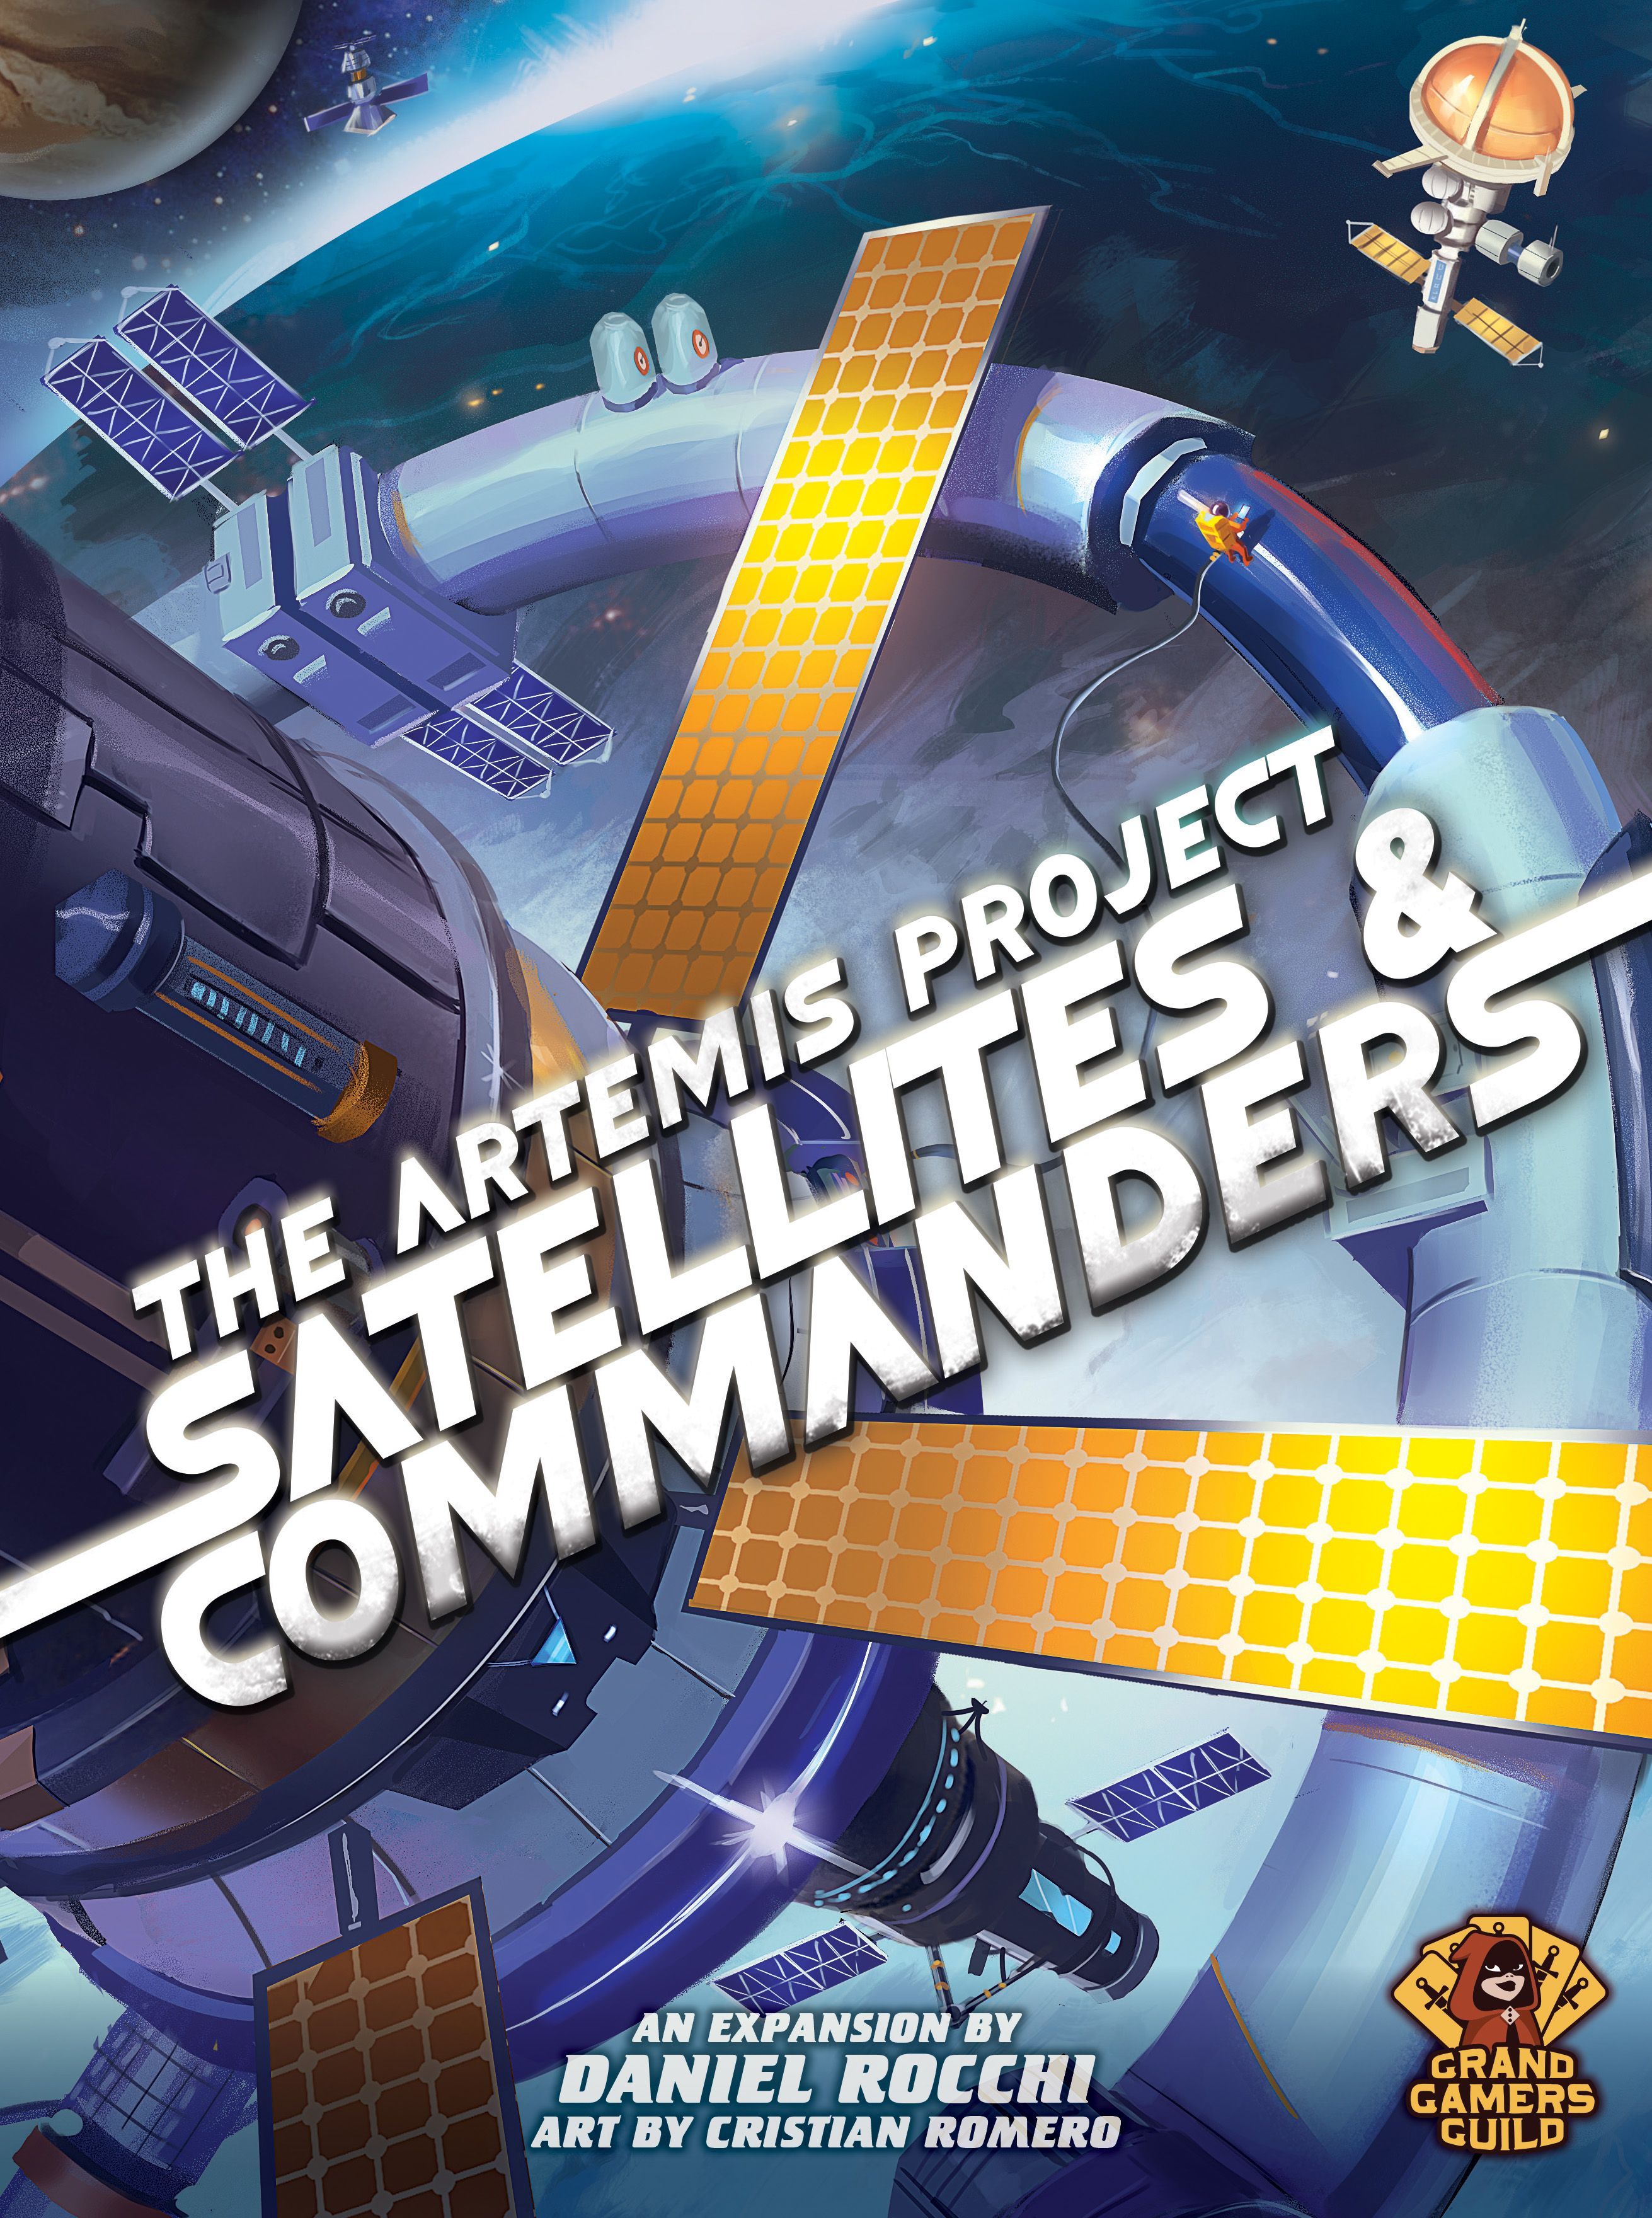 The Artemis Project - Satellites & Commanders